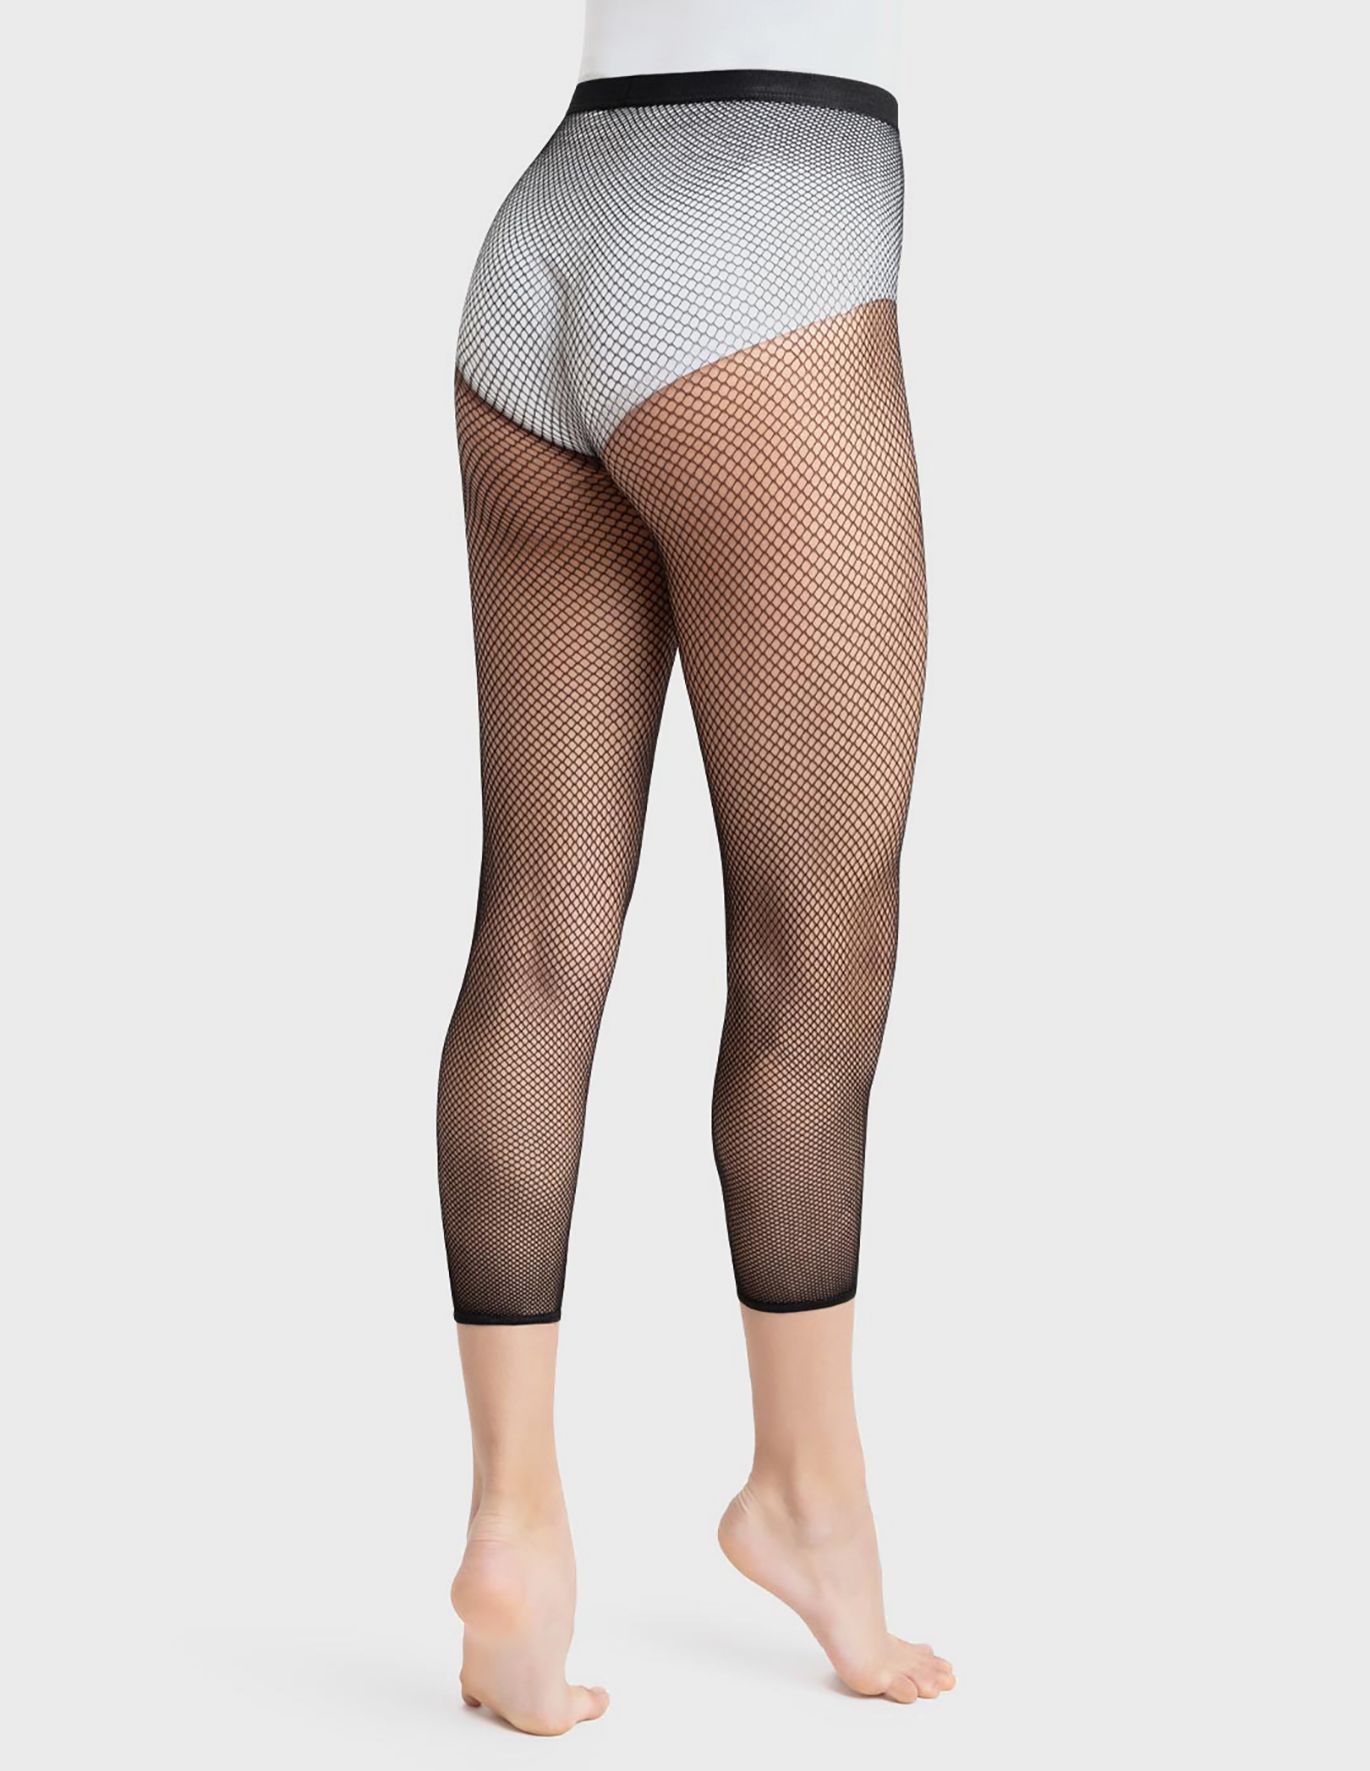 Women High Waist Fishnet Footless Tights Spandex Pantyhose Stockings  Clubwear | eBay